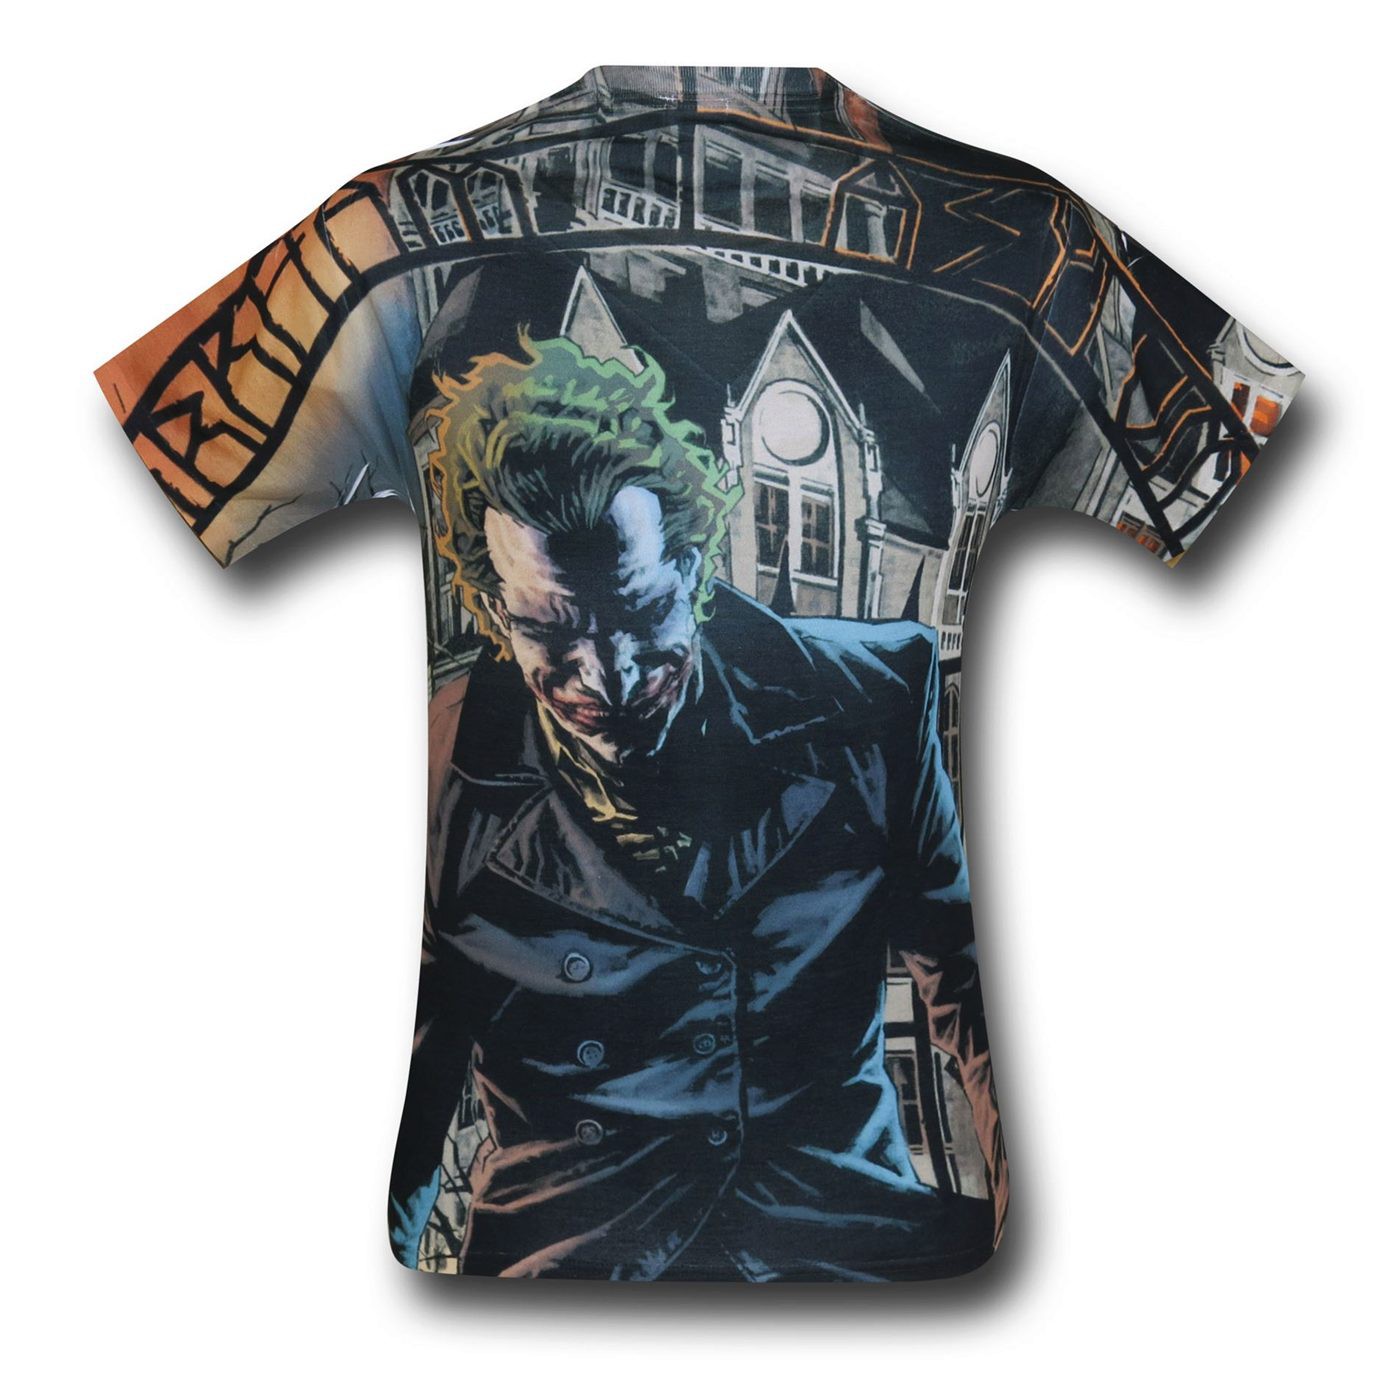 Joker Asylum Sublimated T-Shirt